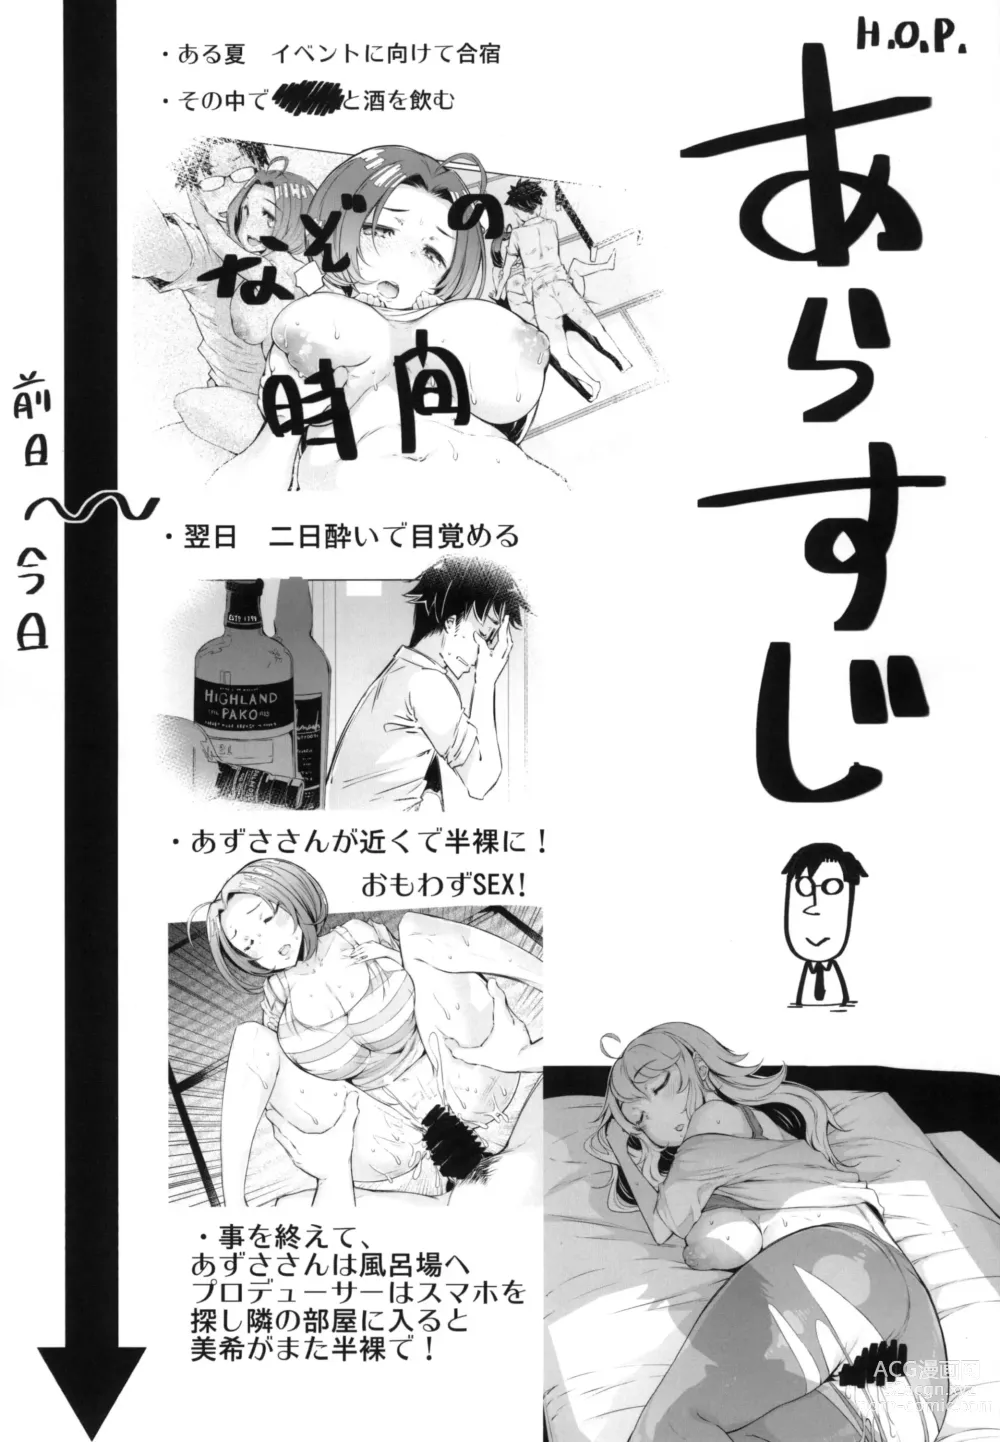 Page 2 of doujinshi HOP vol.2 Miki